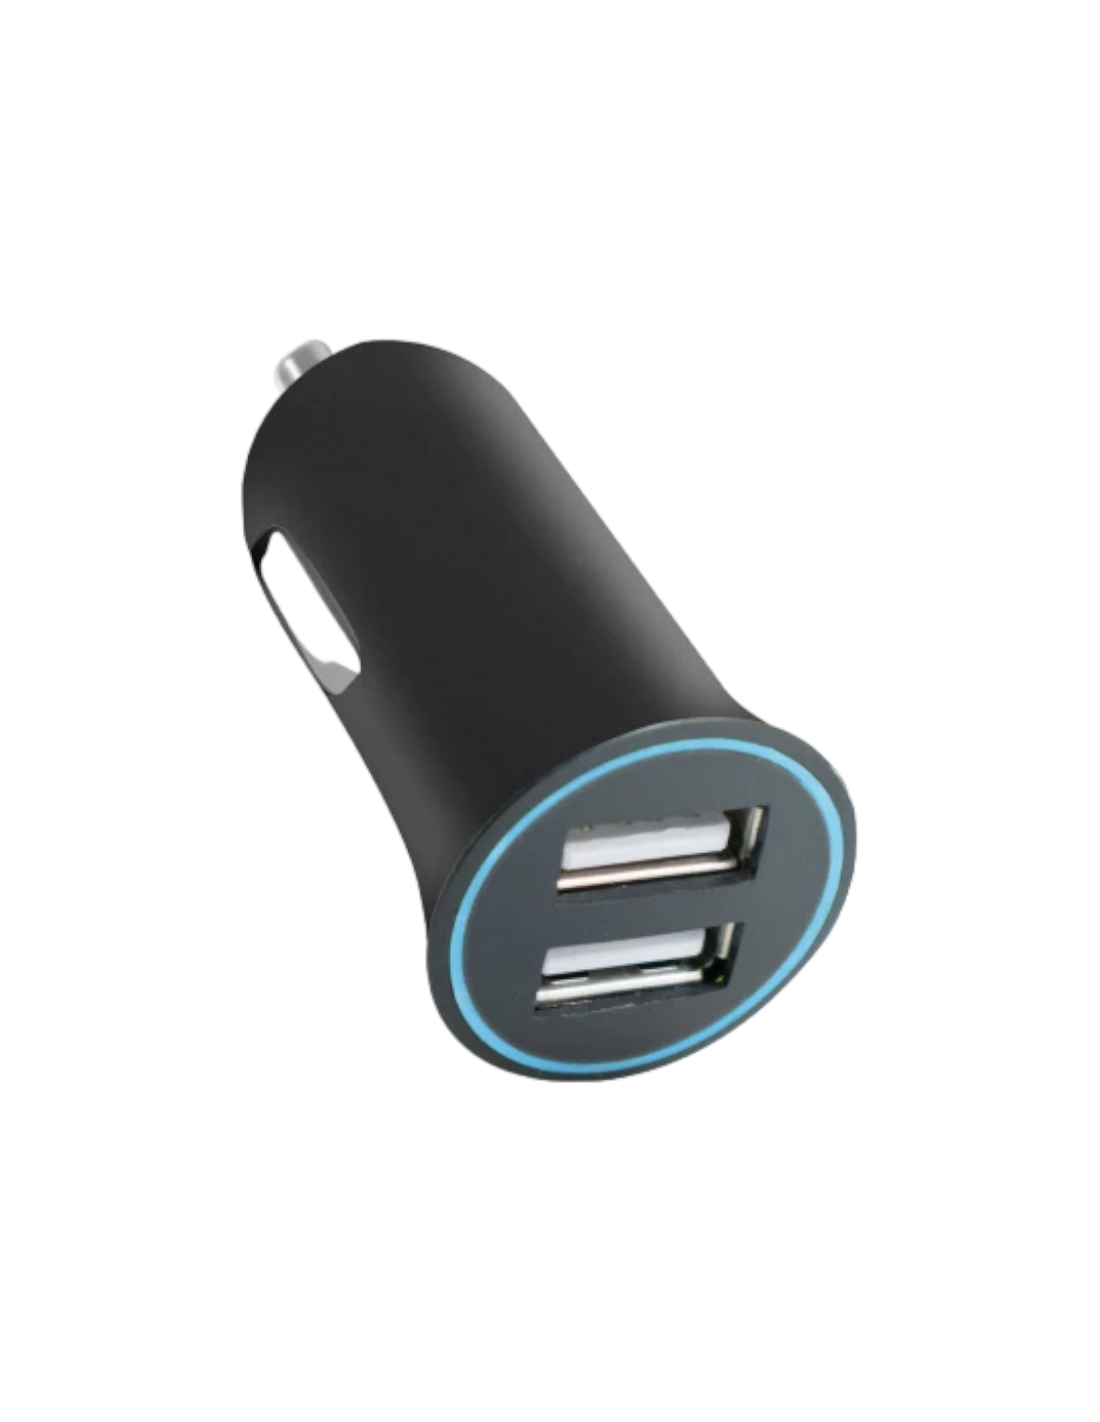 Chargeur pour voiture prise allume cigare double USB 12-24V - 2.4A